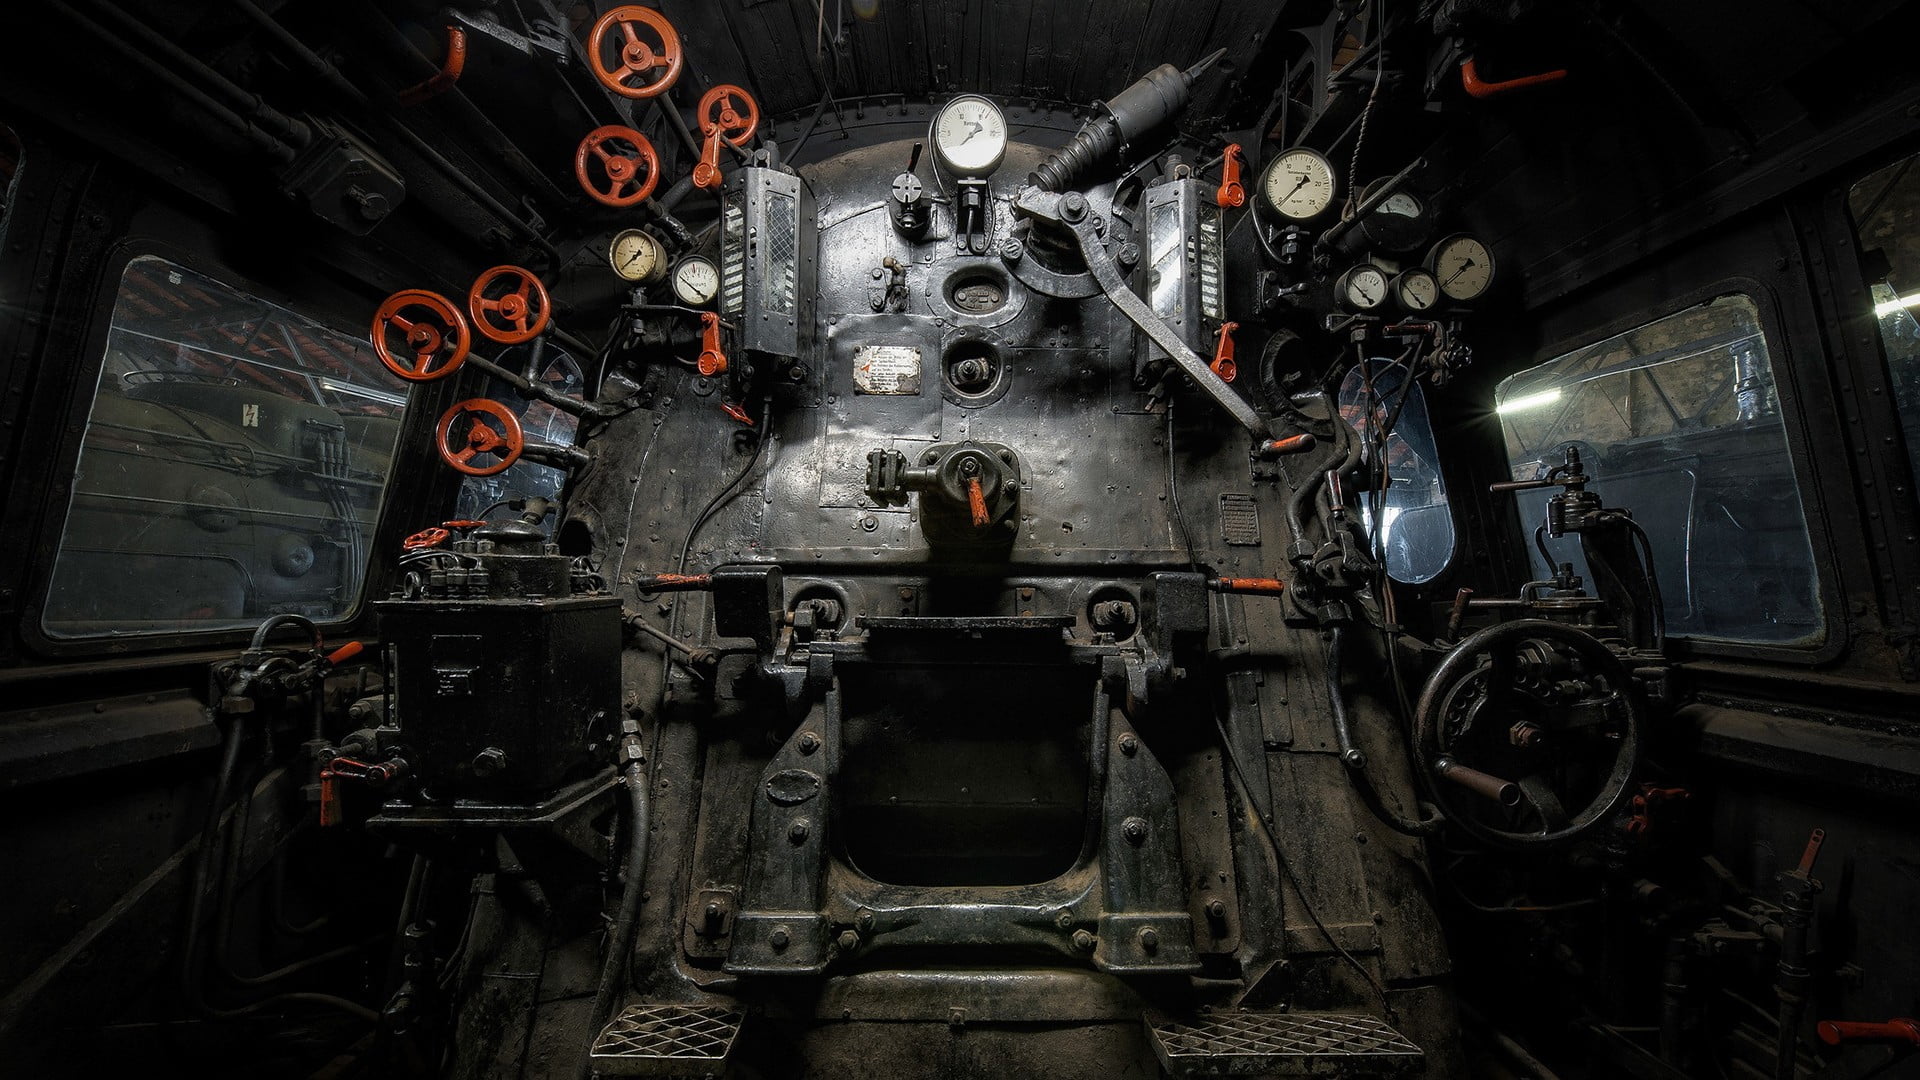 vintage gray train control panel, train, steam locomotive, photography, vehicle interiors